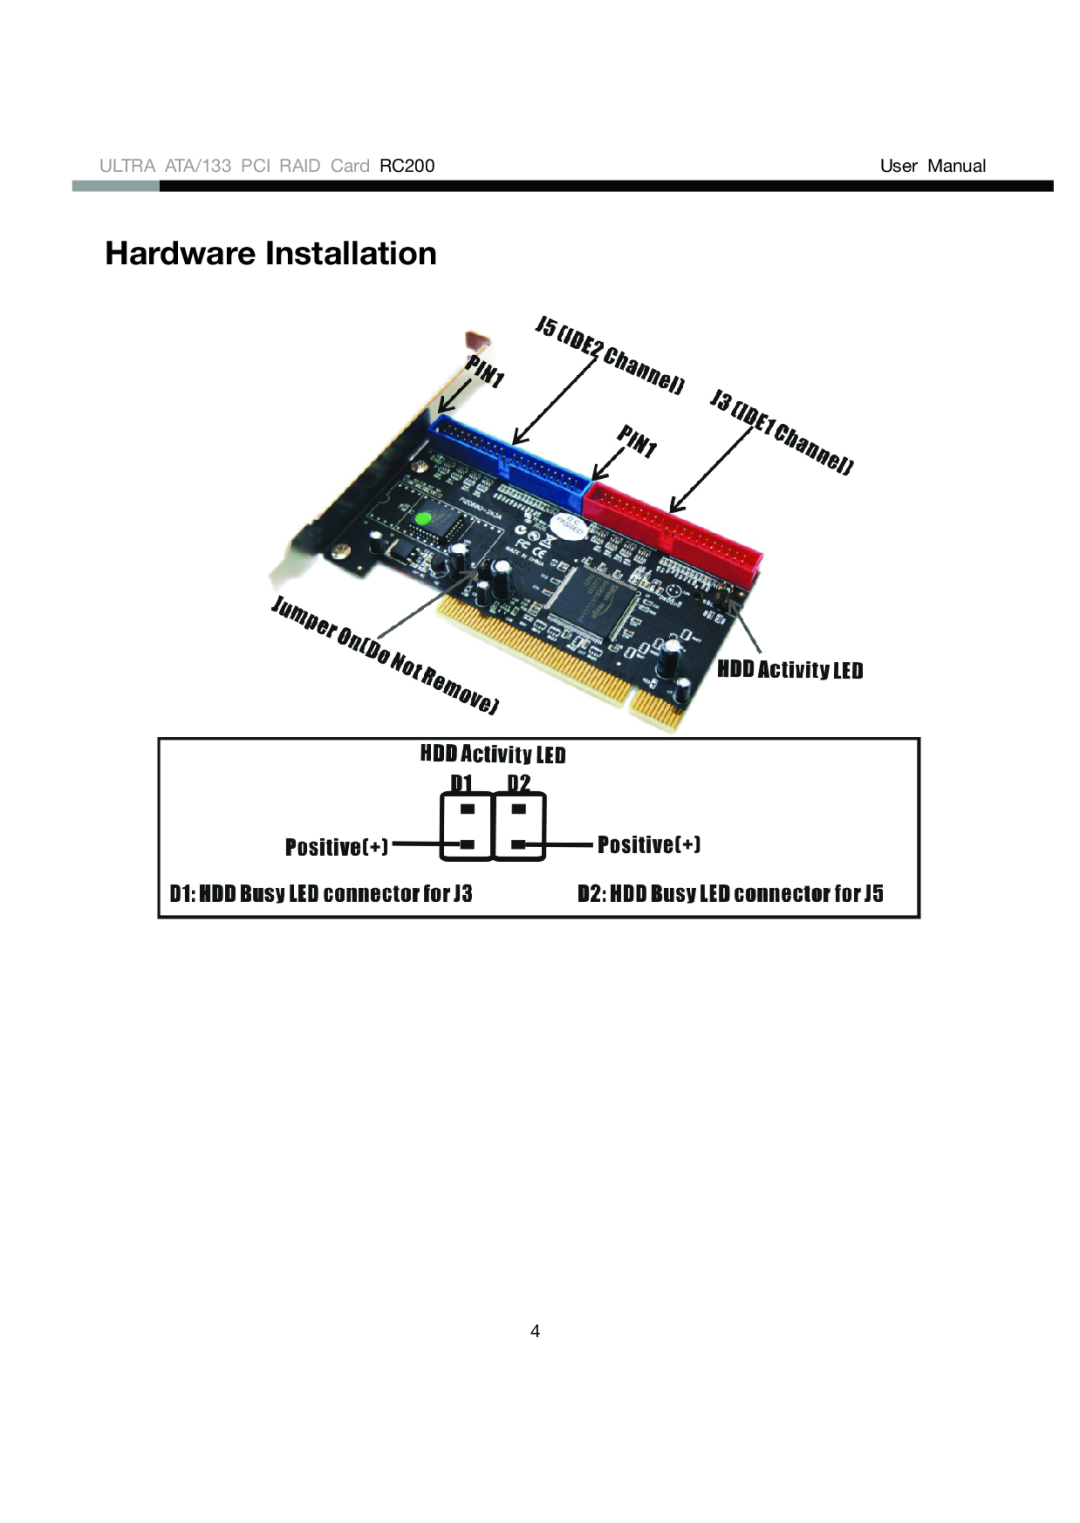 Rosewill user manual Hardware Installation, ULTRA ATA/133 PCI RAID Card RC200, User Manual 